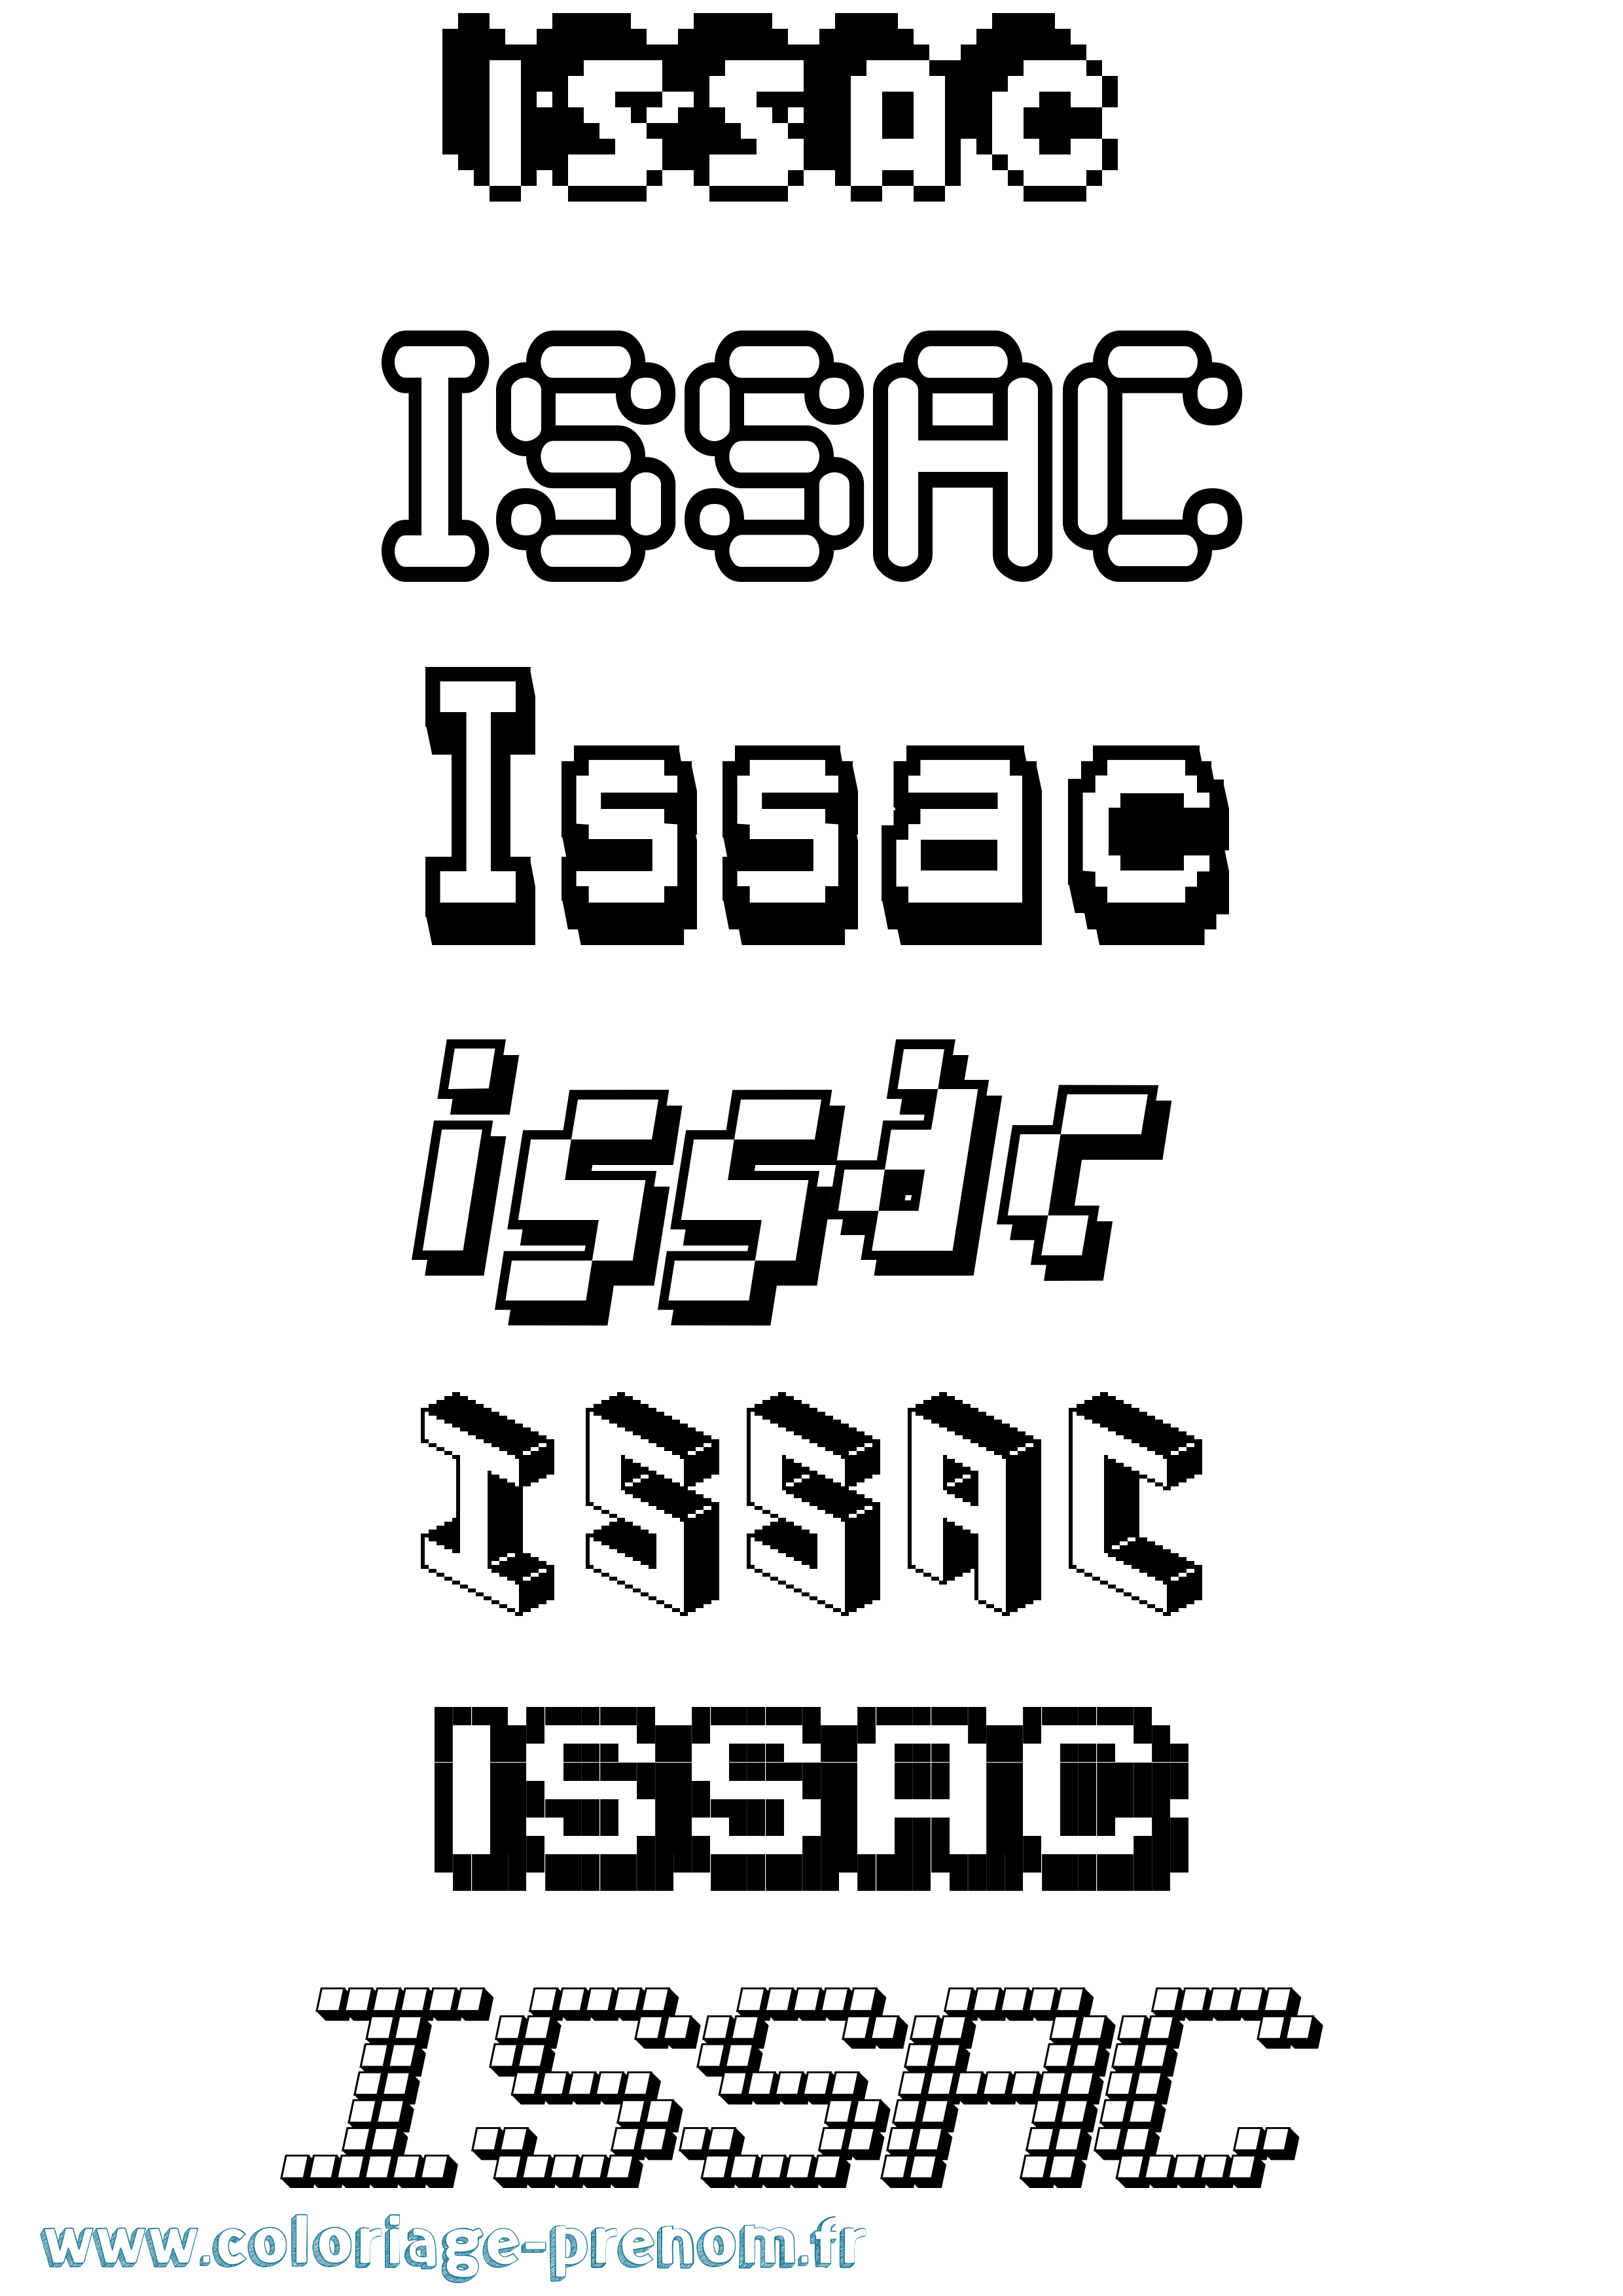 Coloriage prénom Issac Pixel